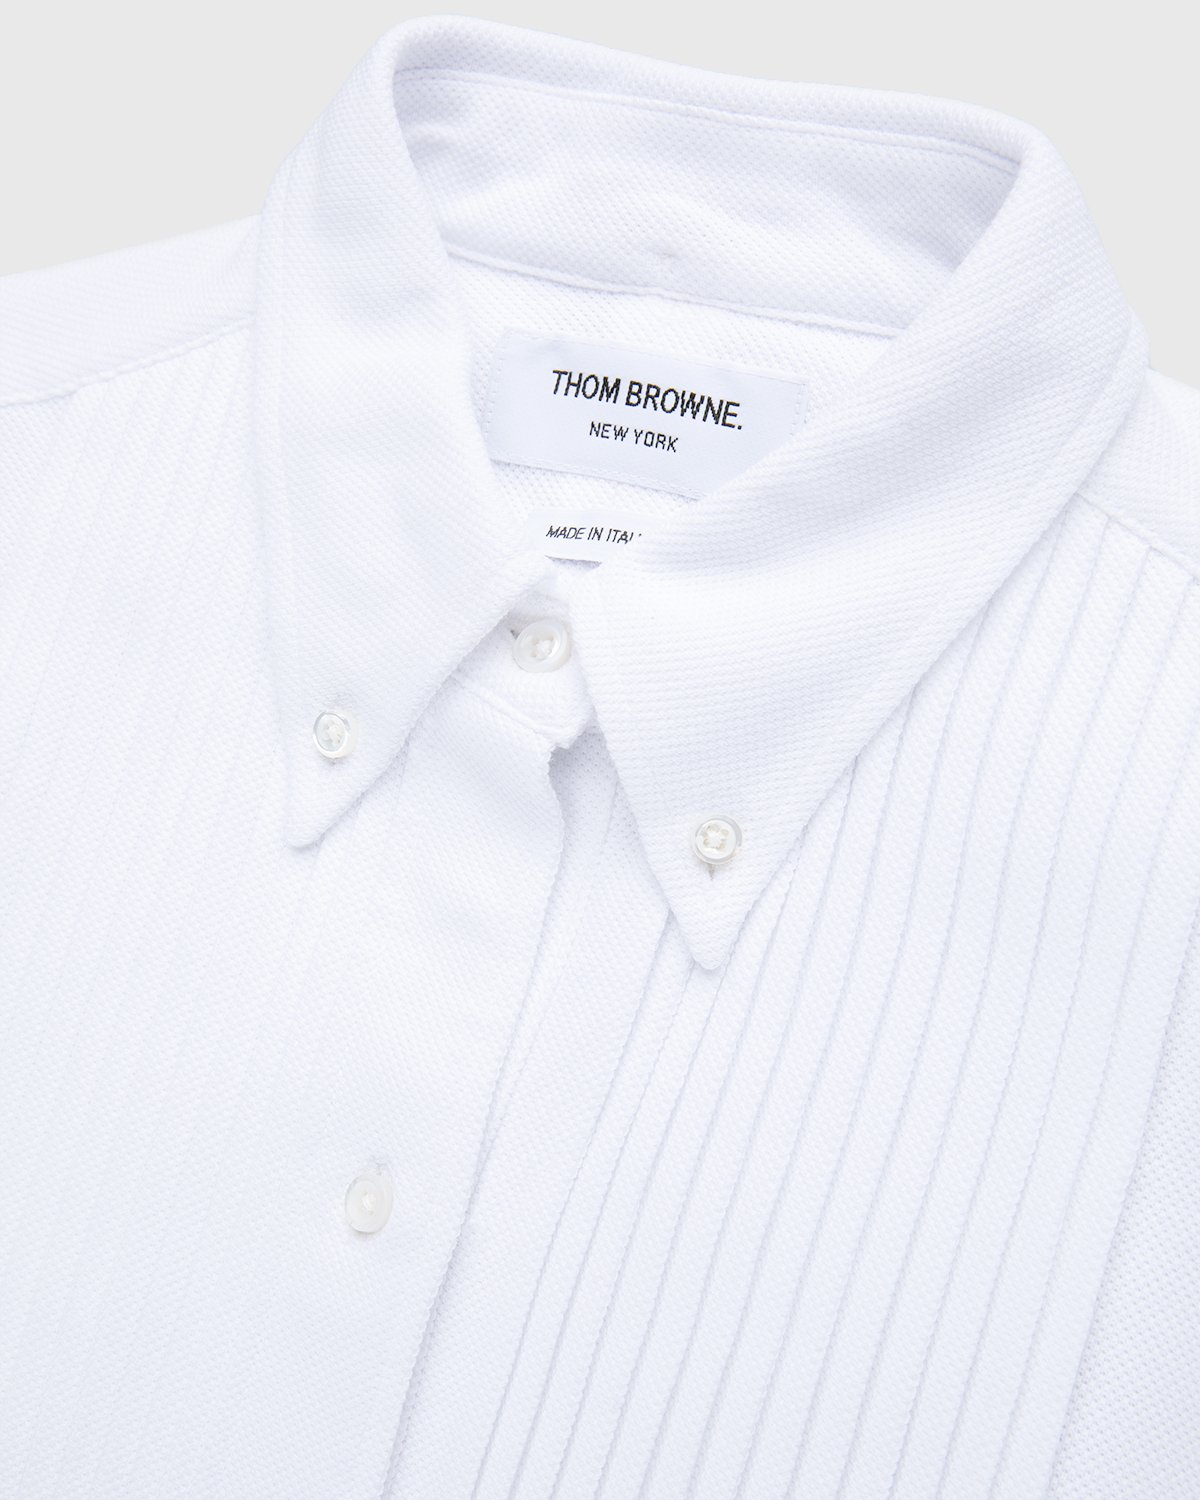 Thom Browne x Highsnobiety - Women’s Button-Down Shirt White - Clothing - White - Image 5